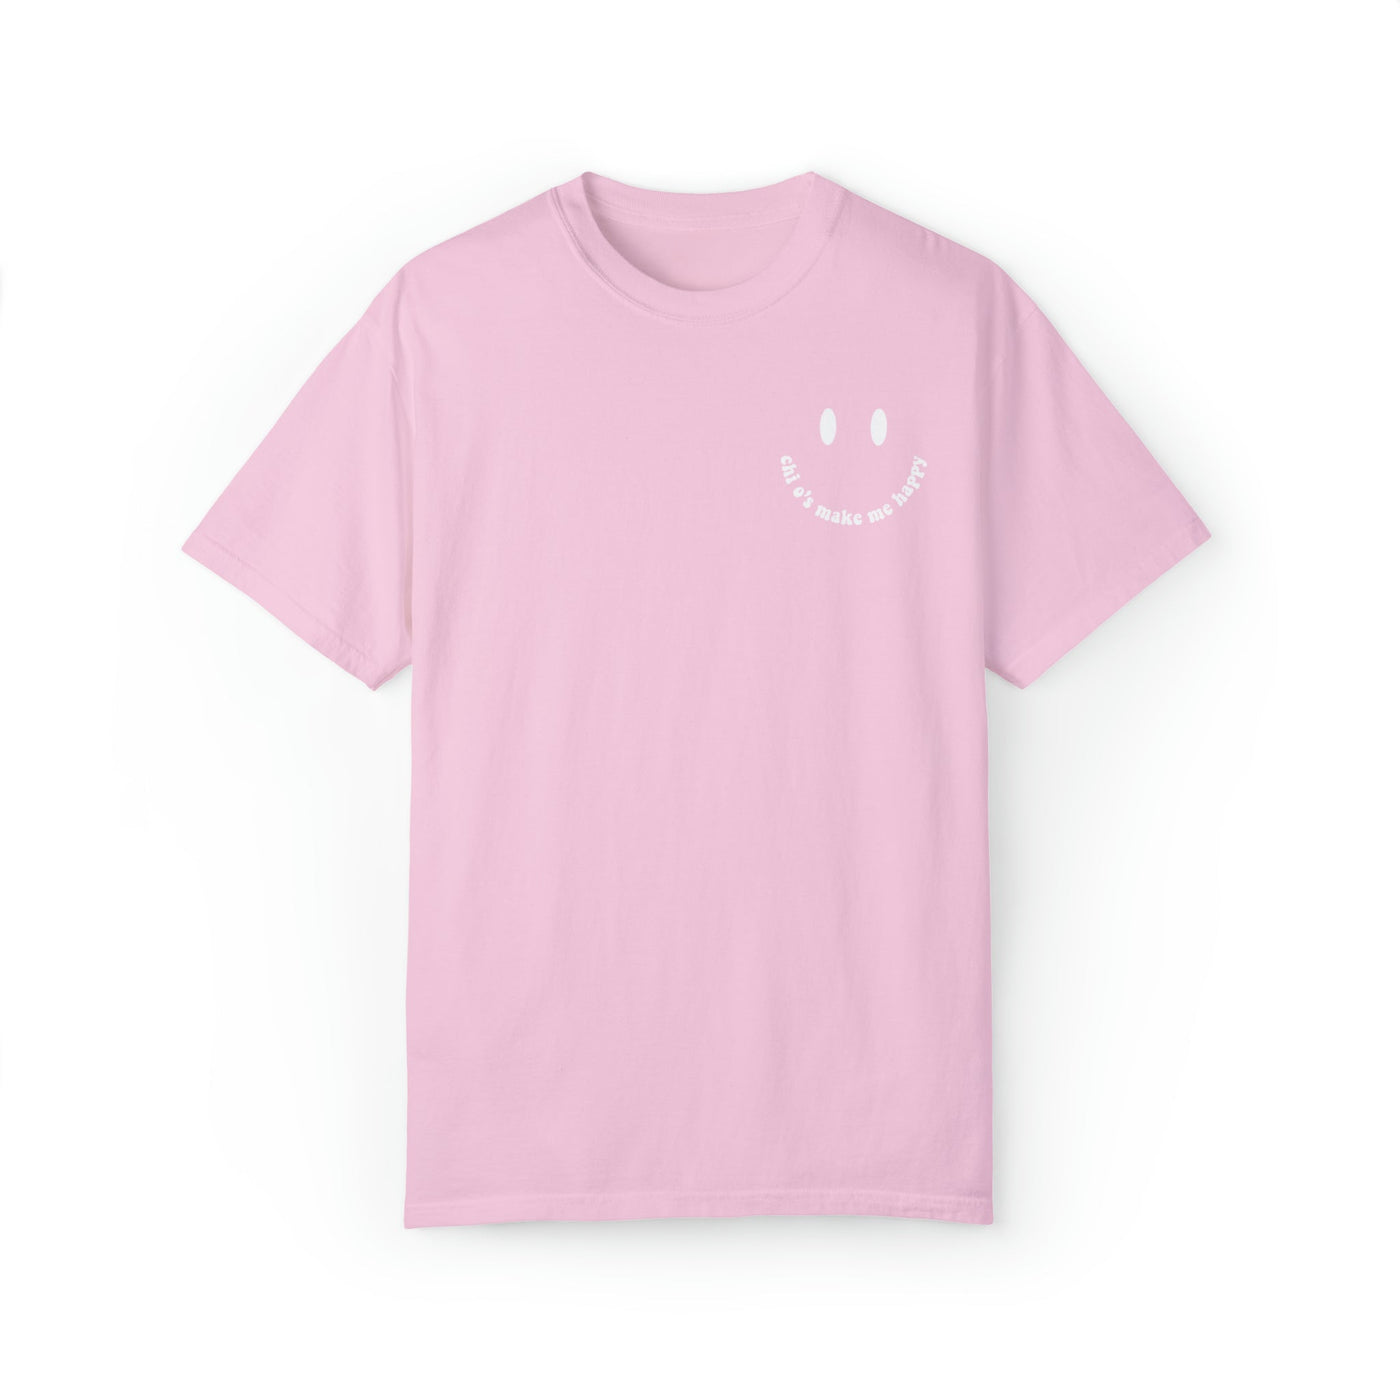 Chi Omega's Make Me Happy Sorority Comfy T-shirt